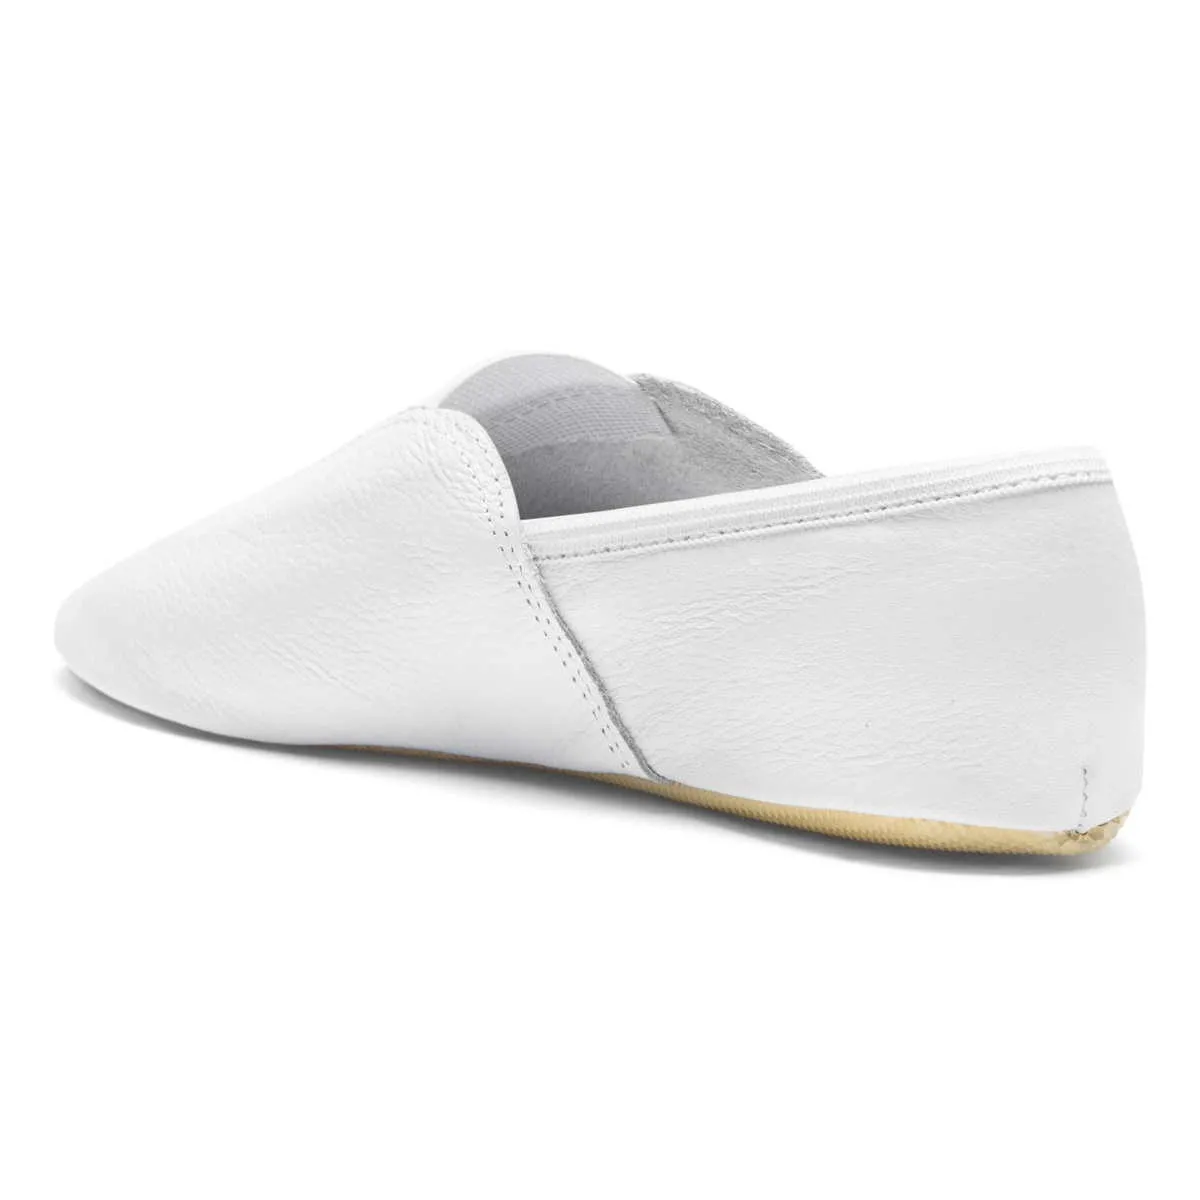 Chaussures de gymnastique blanches